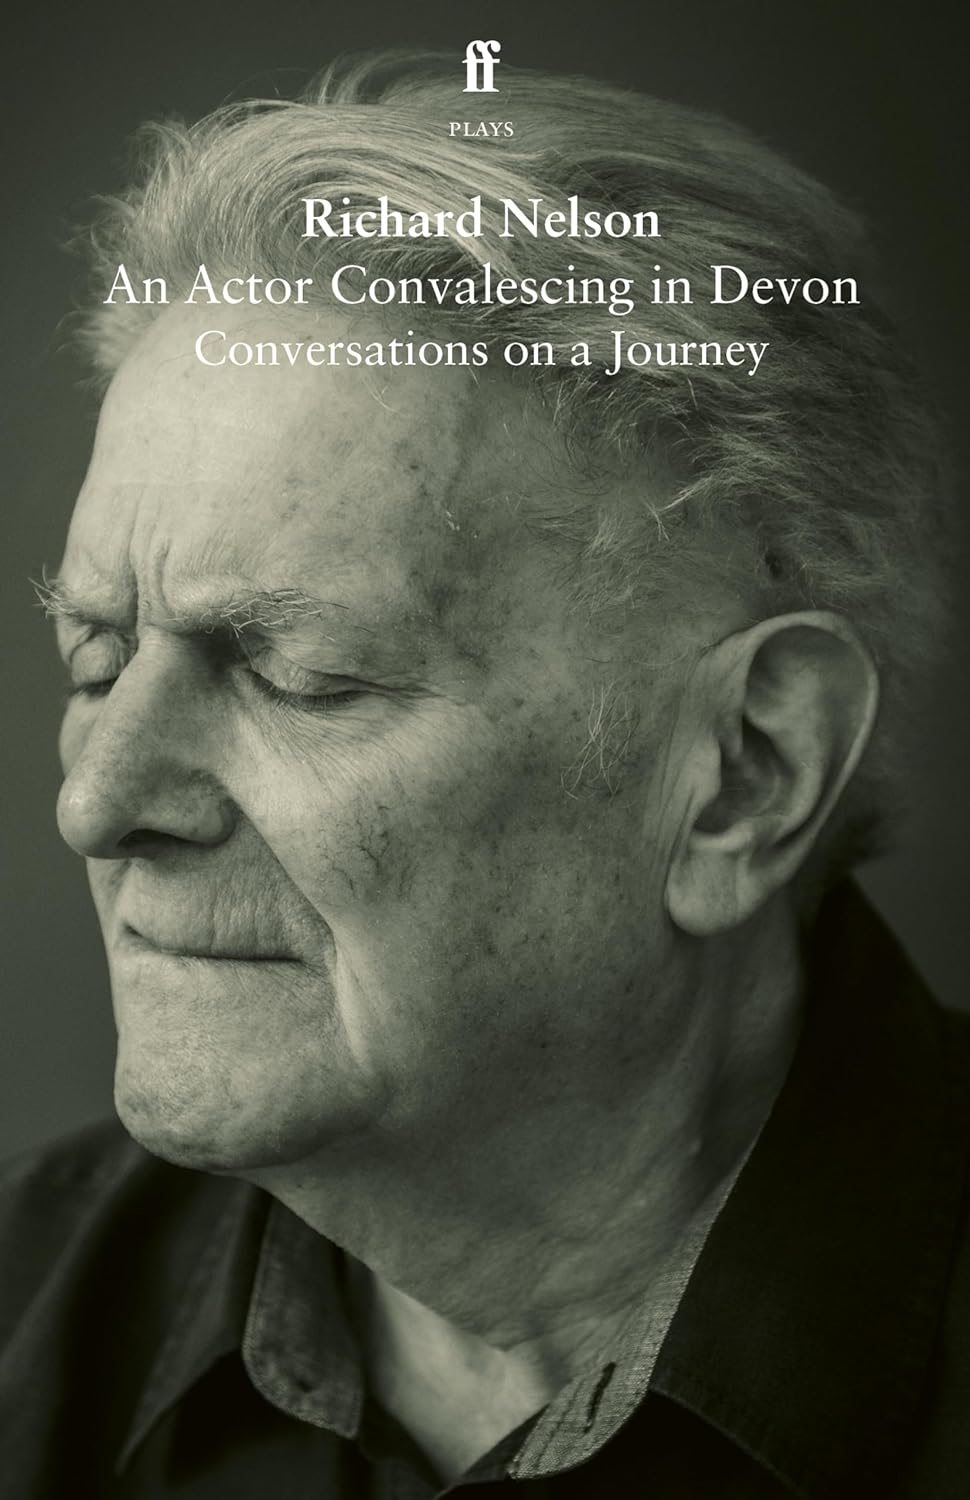 An Actor Convalescing in Devon by Richard Nelson